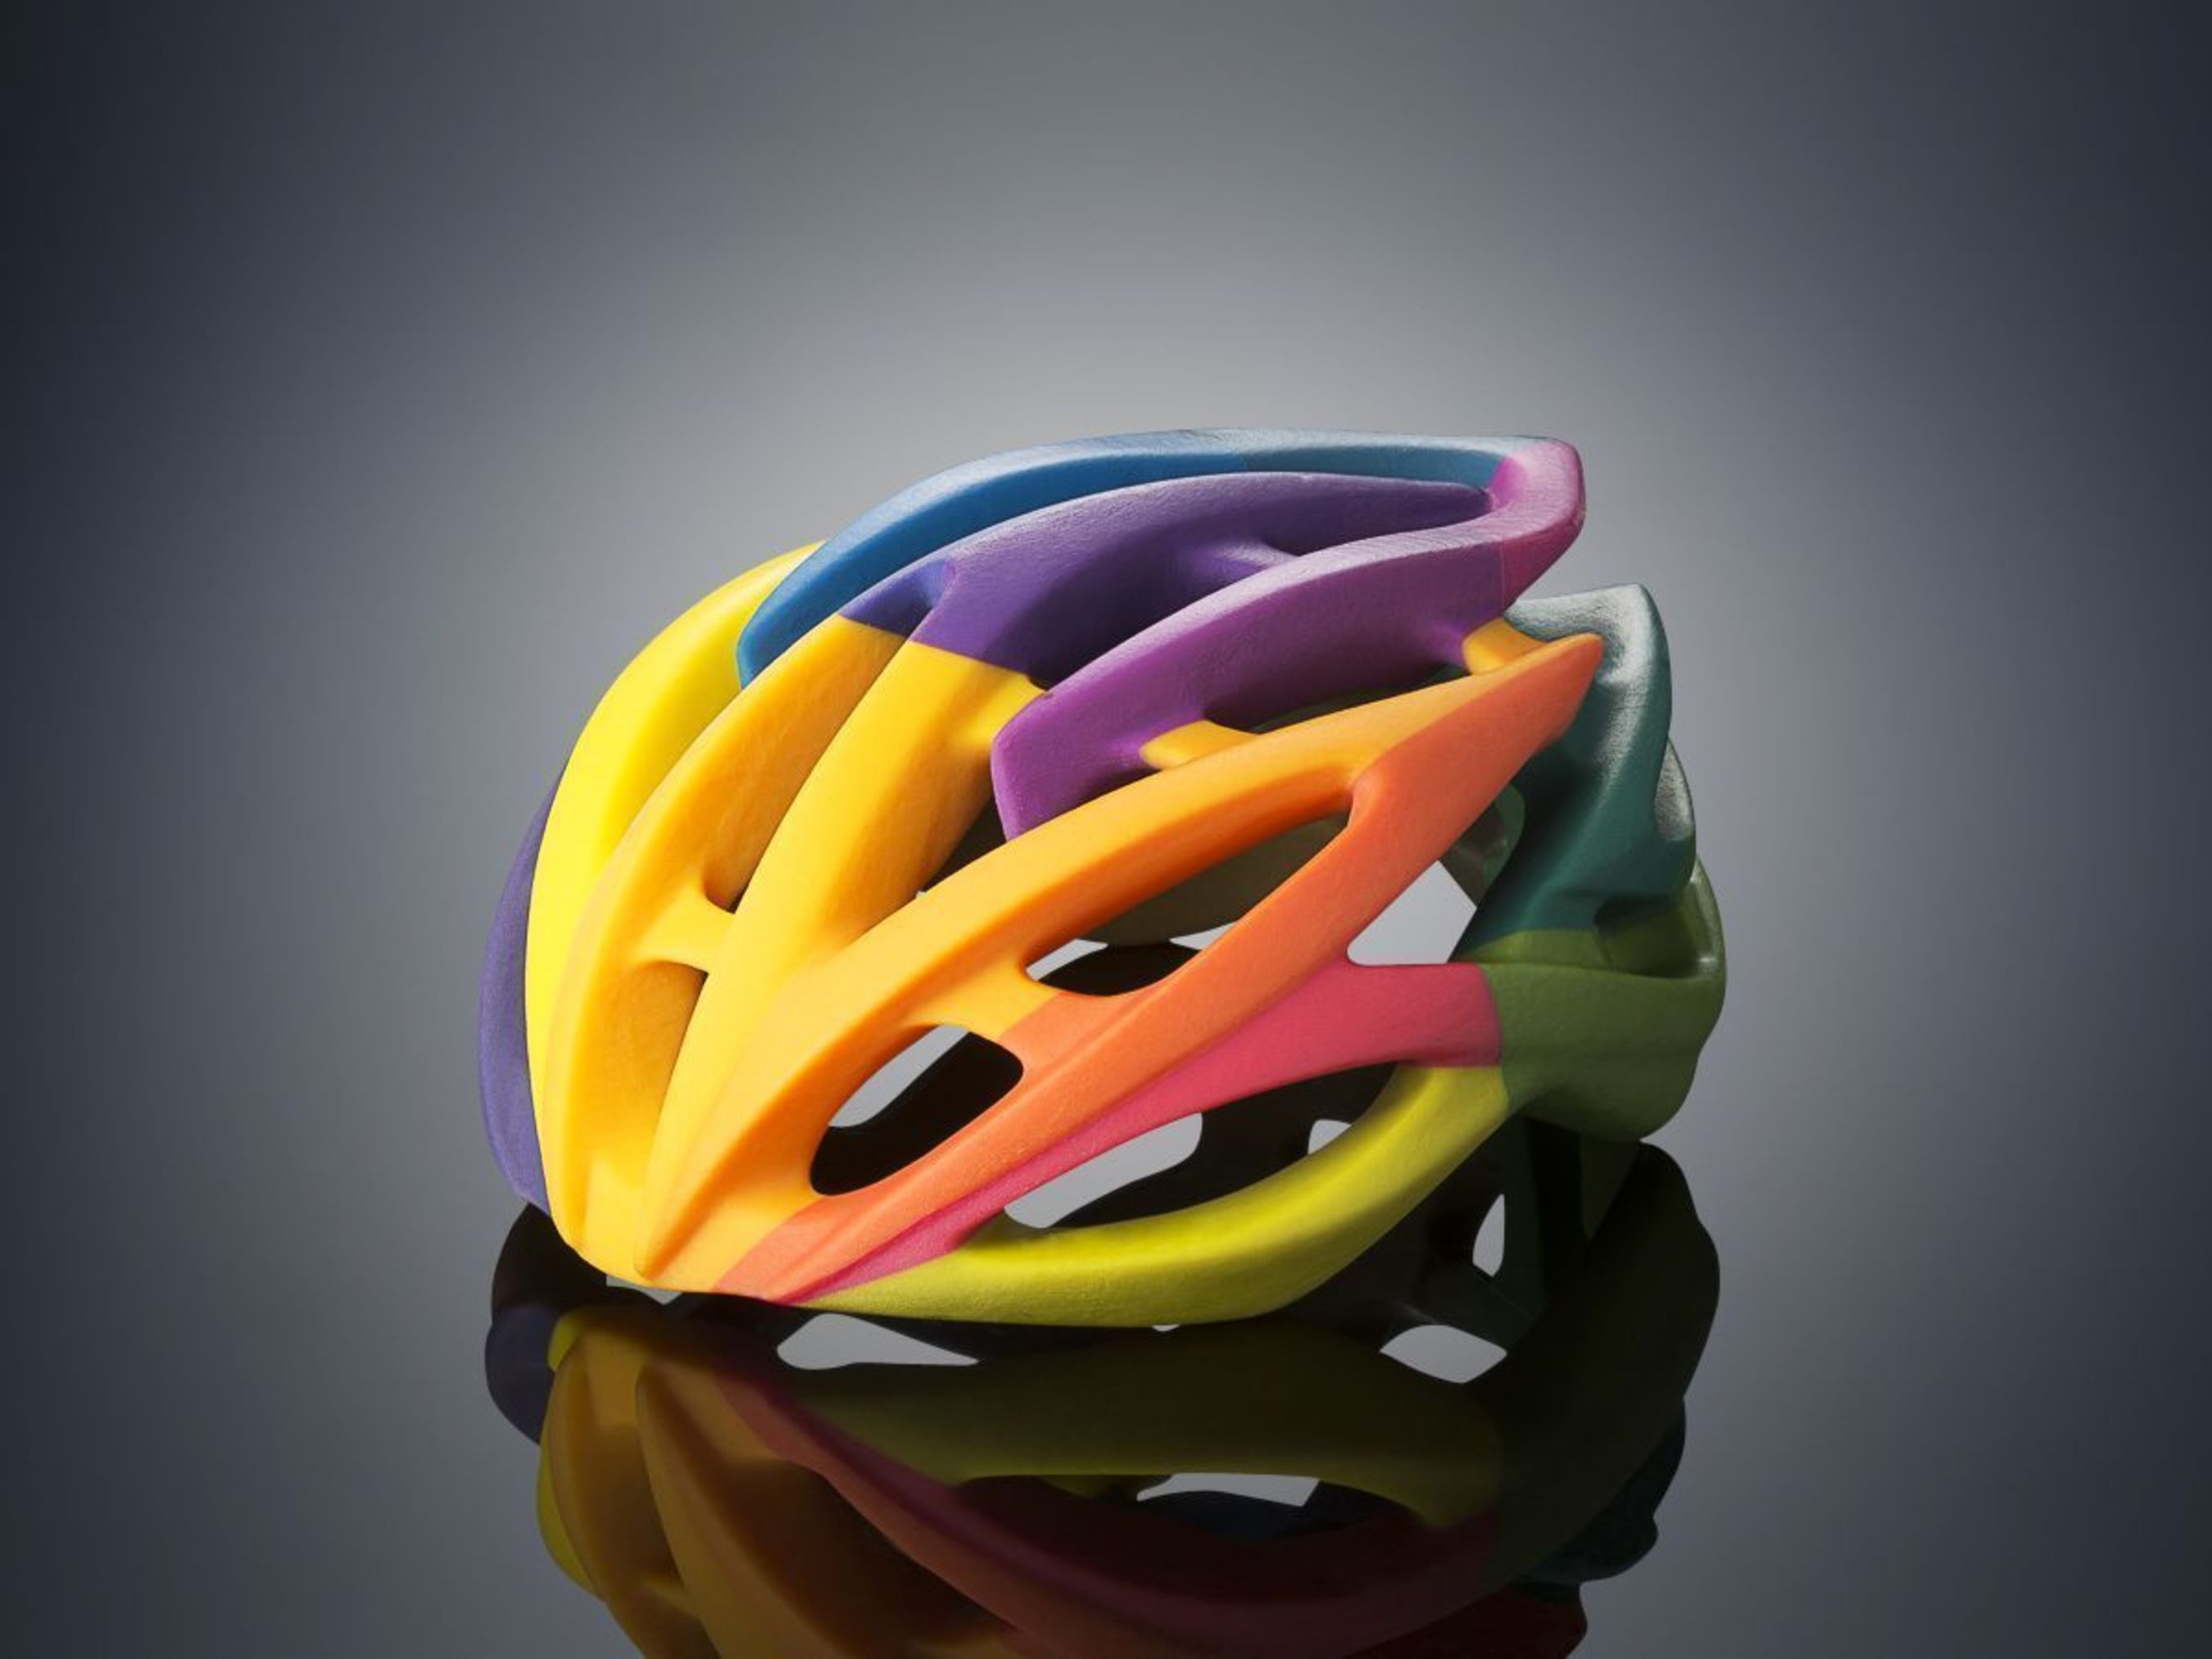 Bike helmet 3D printed on the Objet500 Connex3 Color Multi-material 3D Printer in one print job using VeroCyan, VeroMagenta, and VeroYellow (PRNewsFoto/Stratasys)